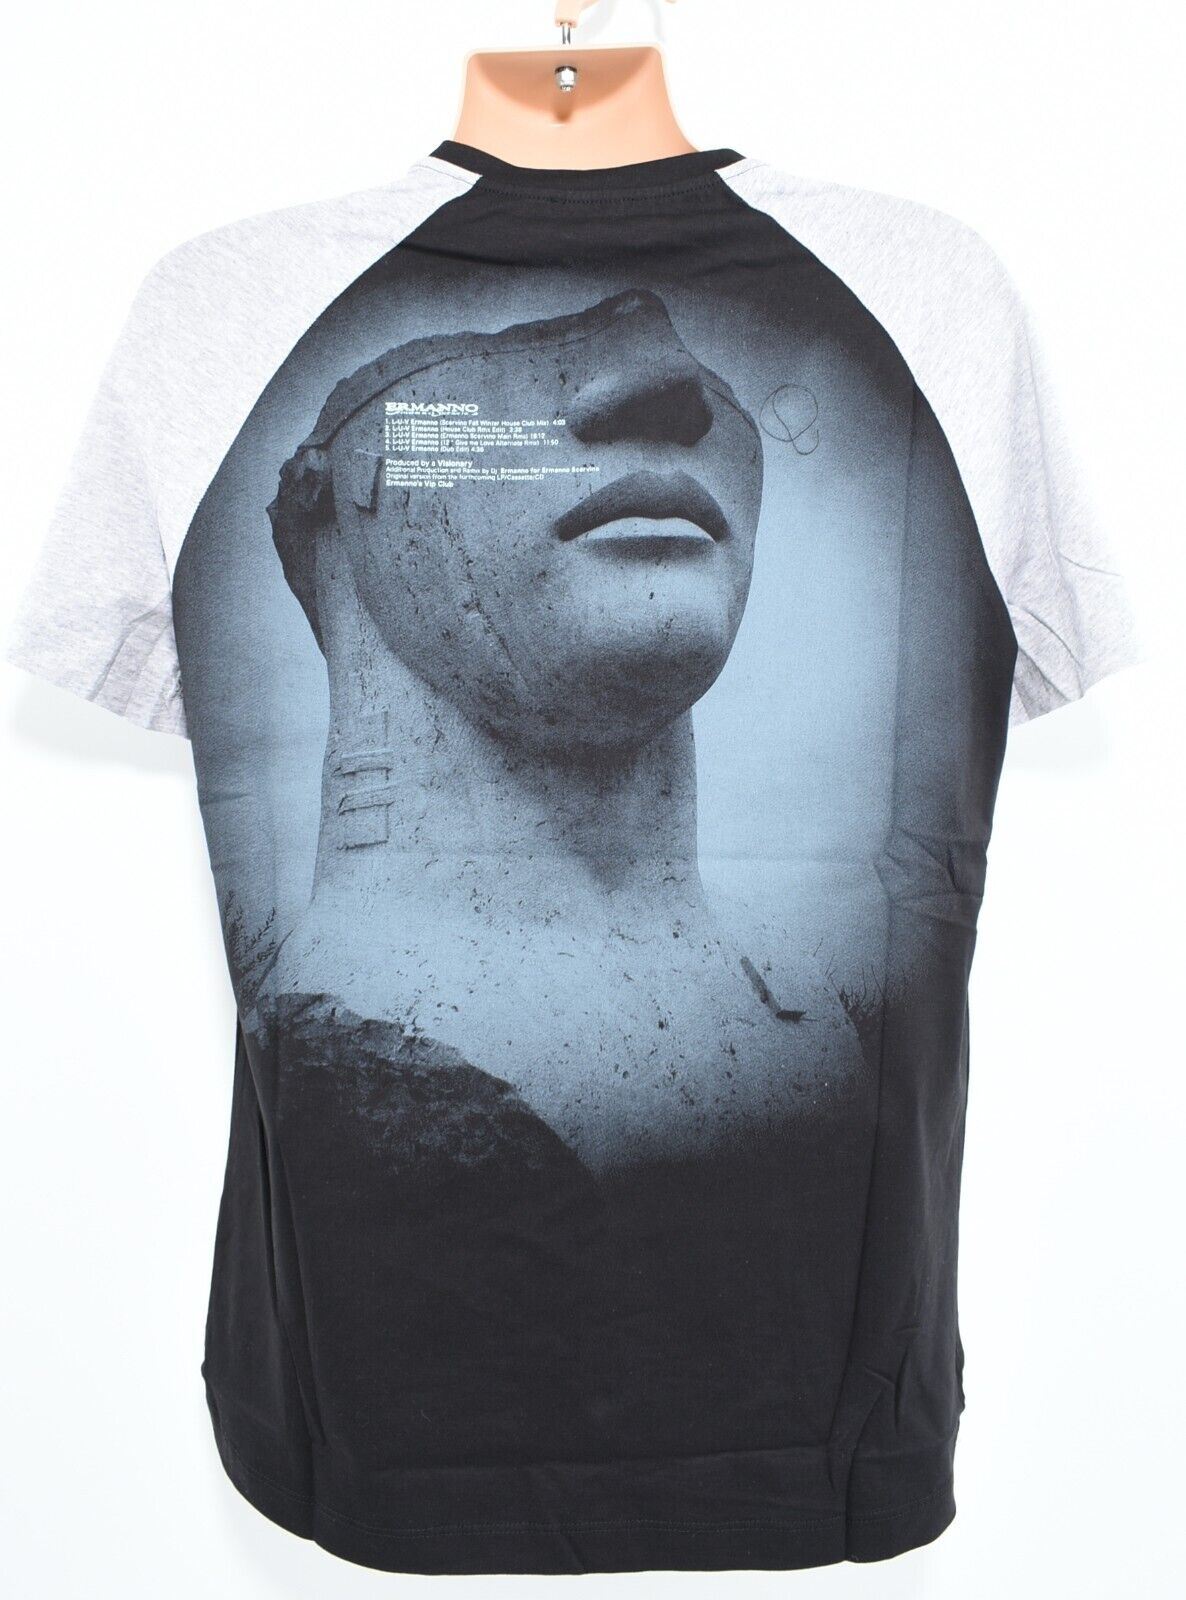 ERMANNO SCERVINO Mens T-shirt Top, Graphic Print at The Back, Black/Grey, size L